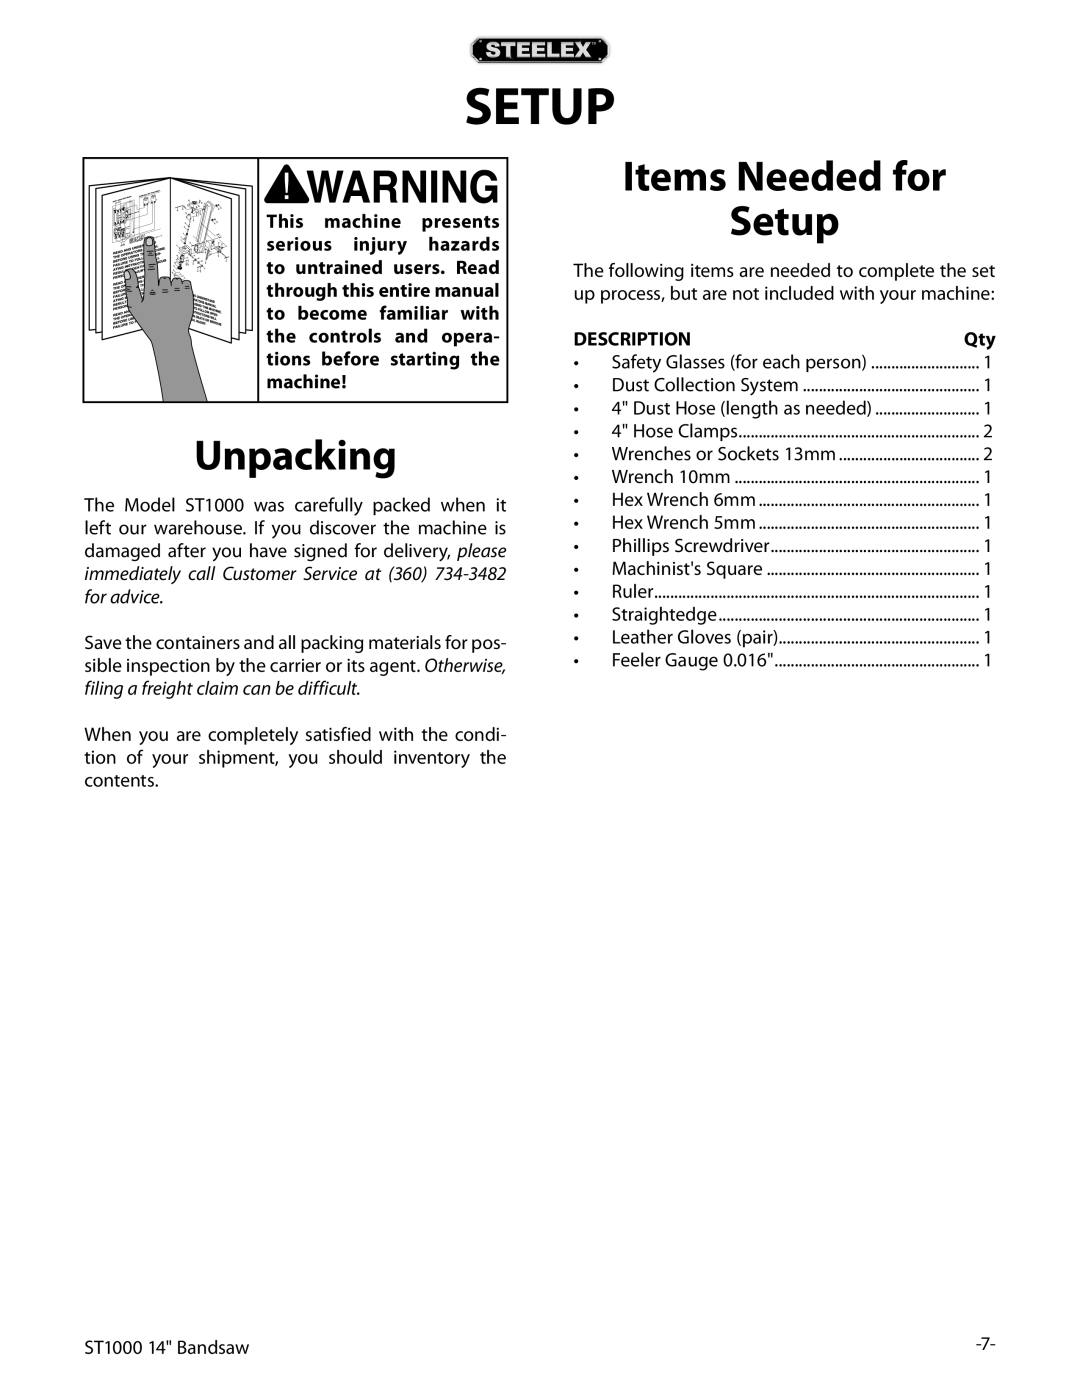 Woodstock ST1000 owner manual Unpacking, Items Needed for Setup, Description 